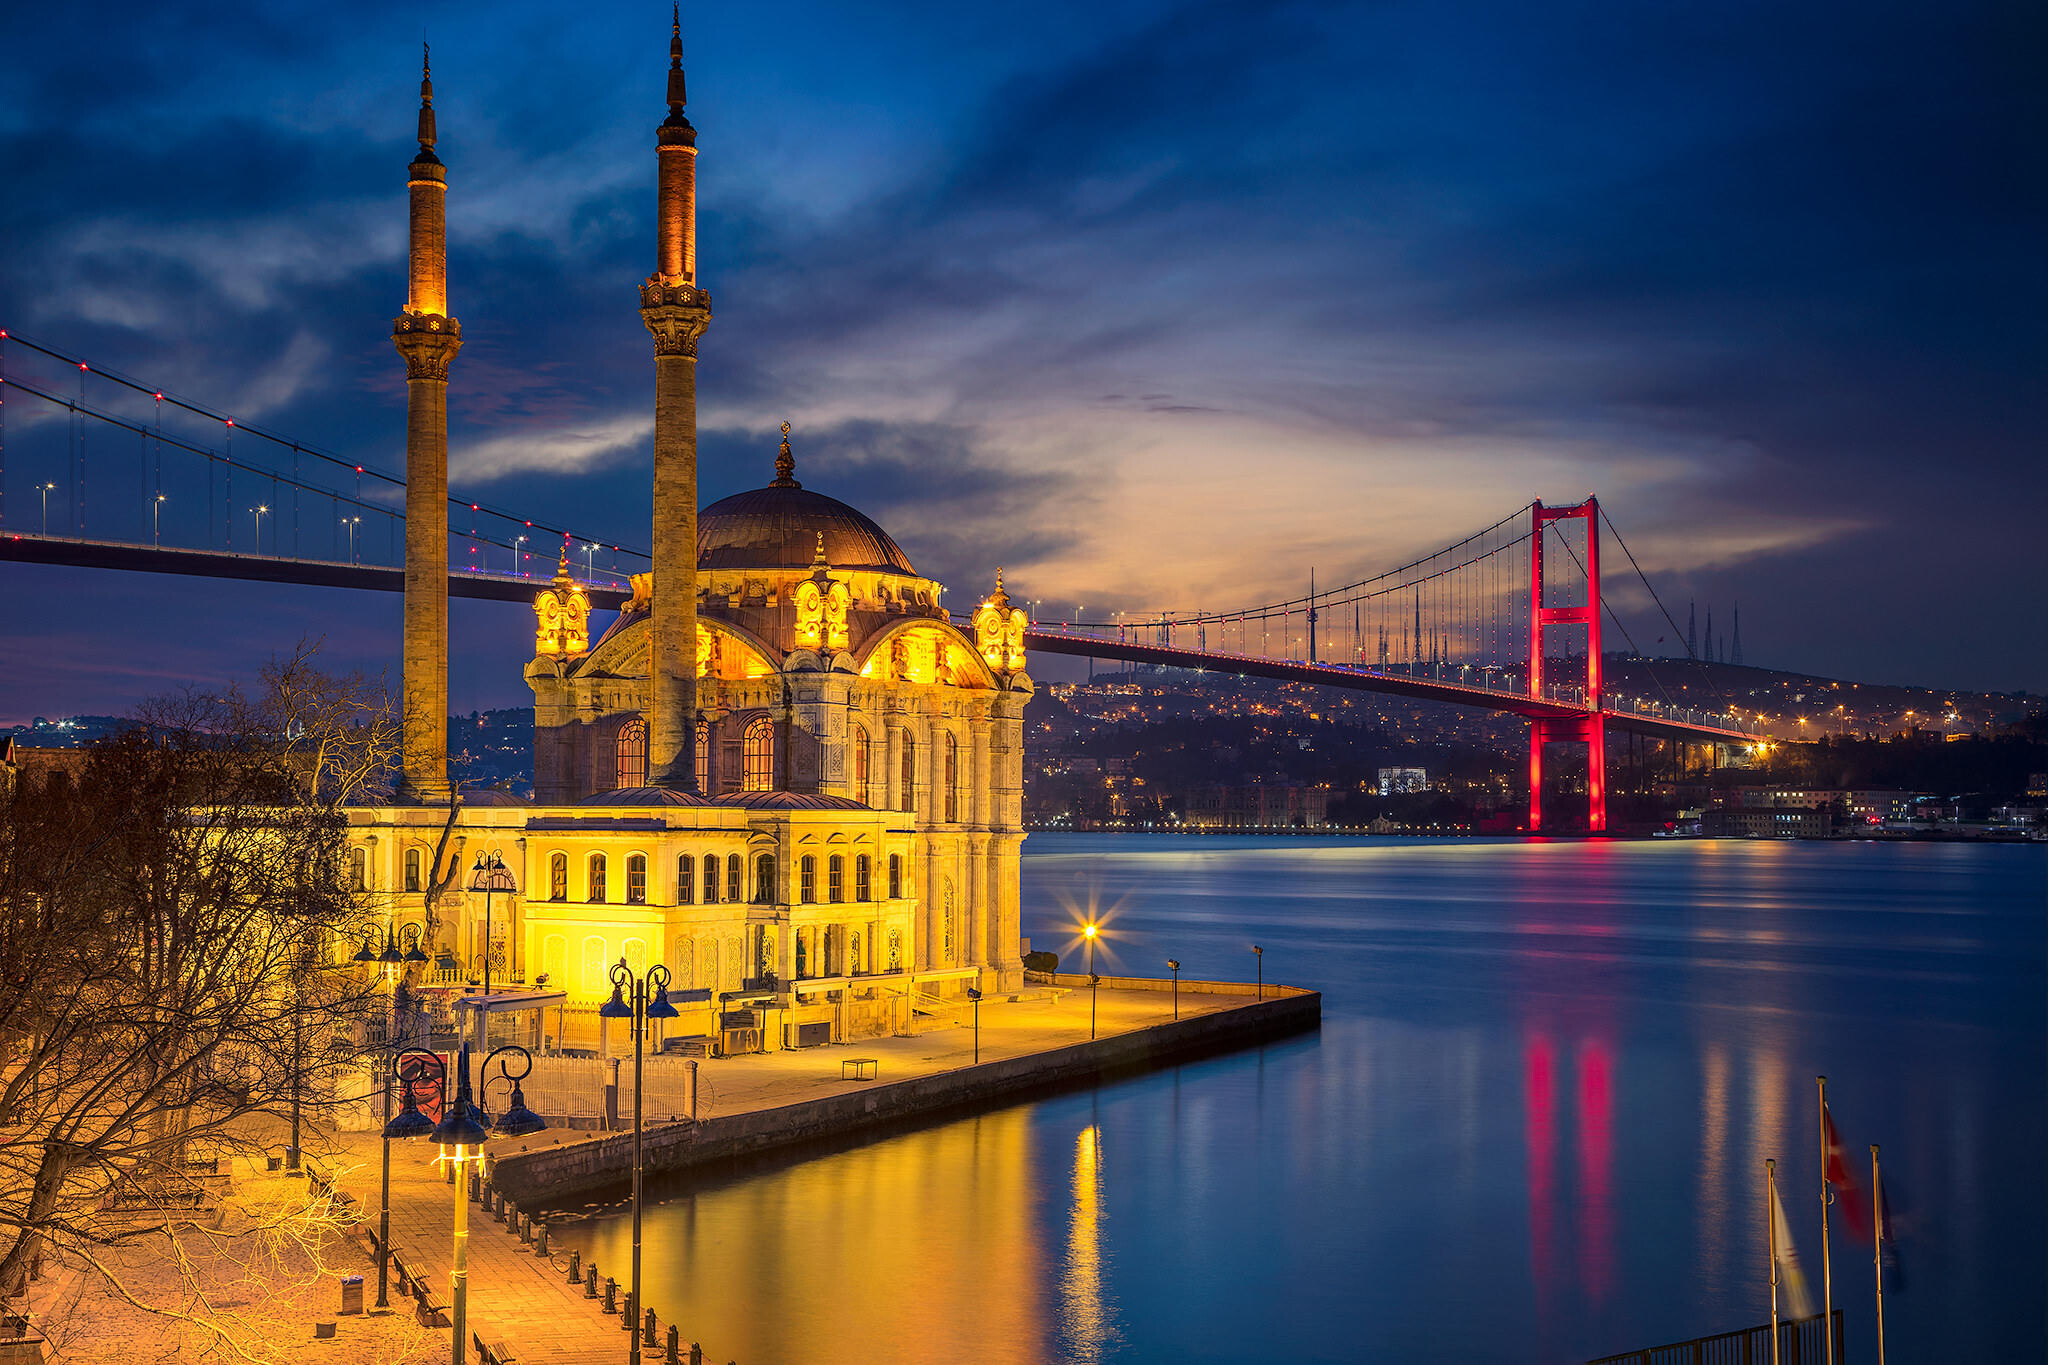 lastsecond.ir-Istanbul attractions at night 3.jpg